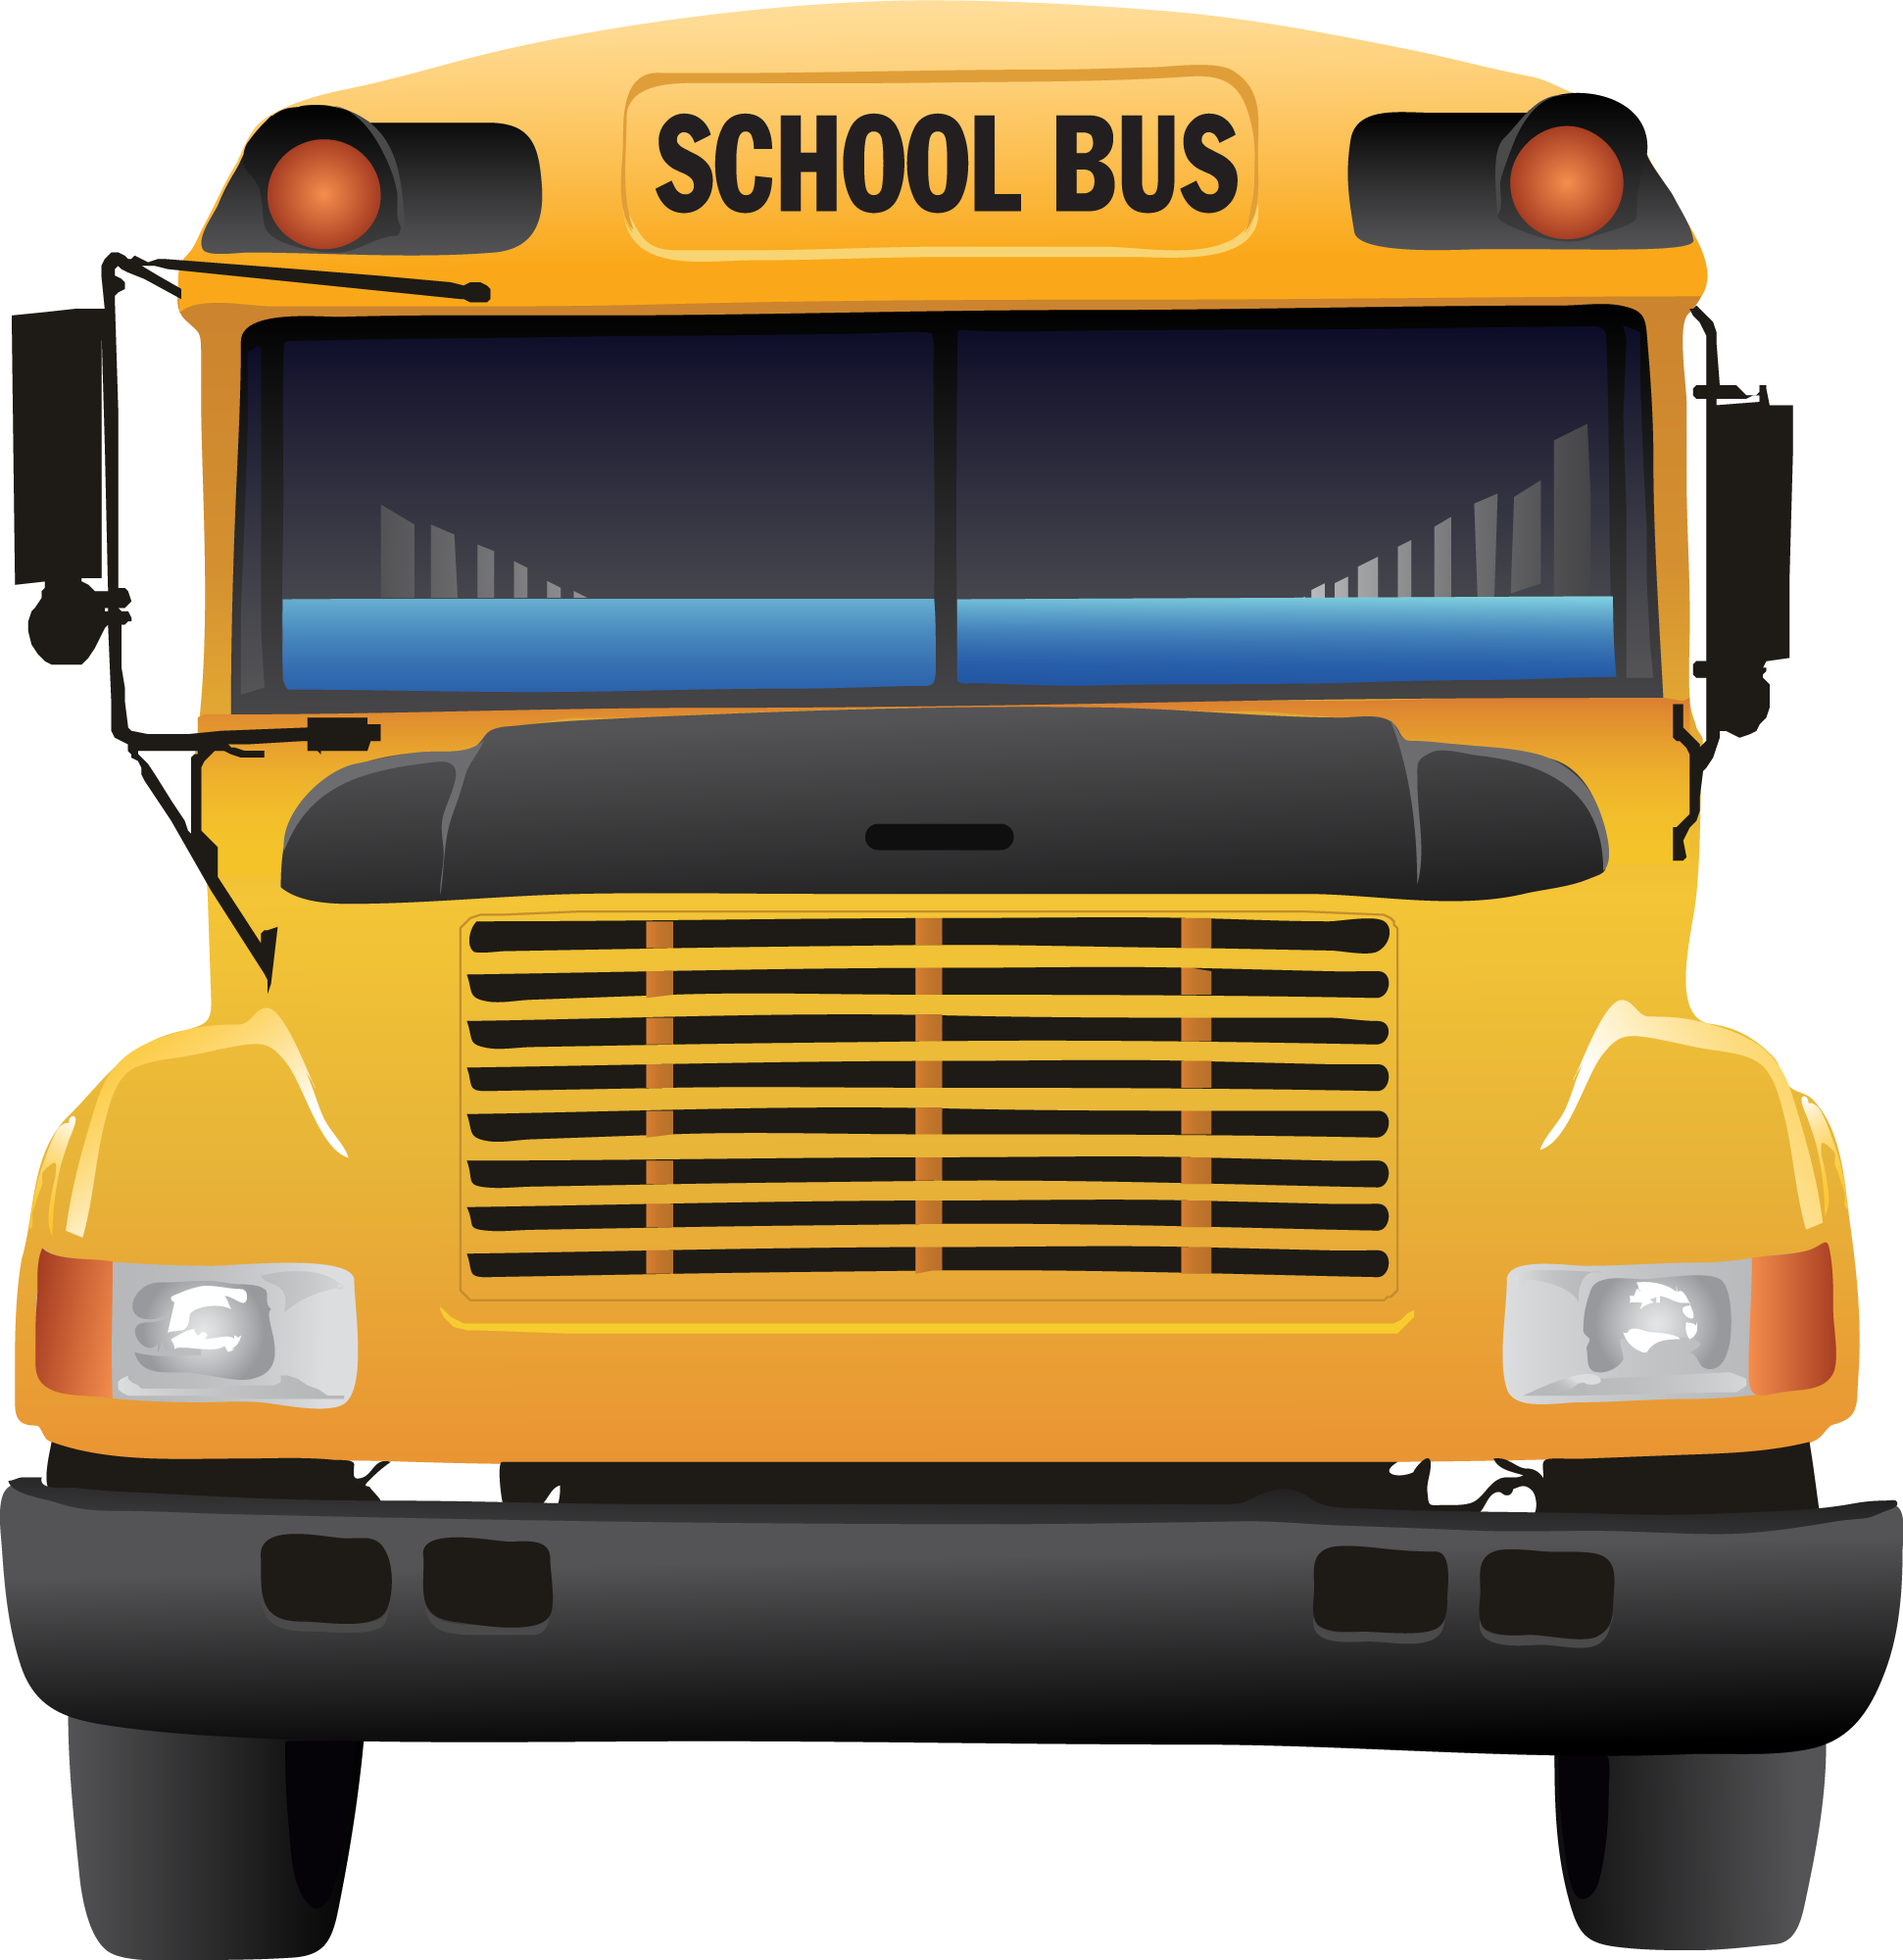 School bus safety clipart kid